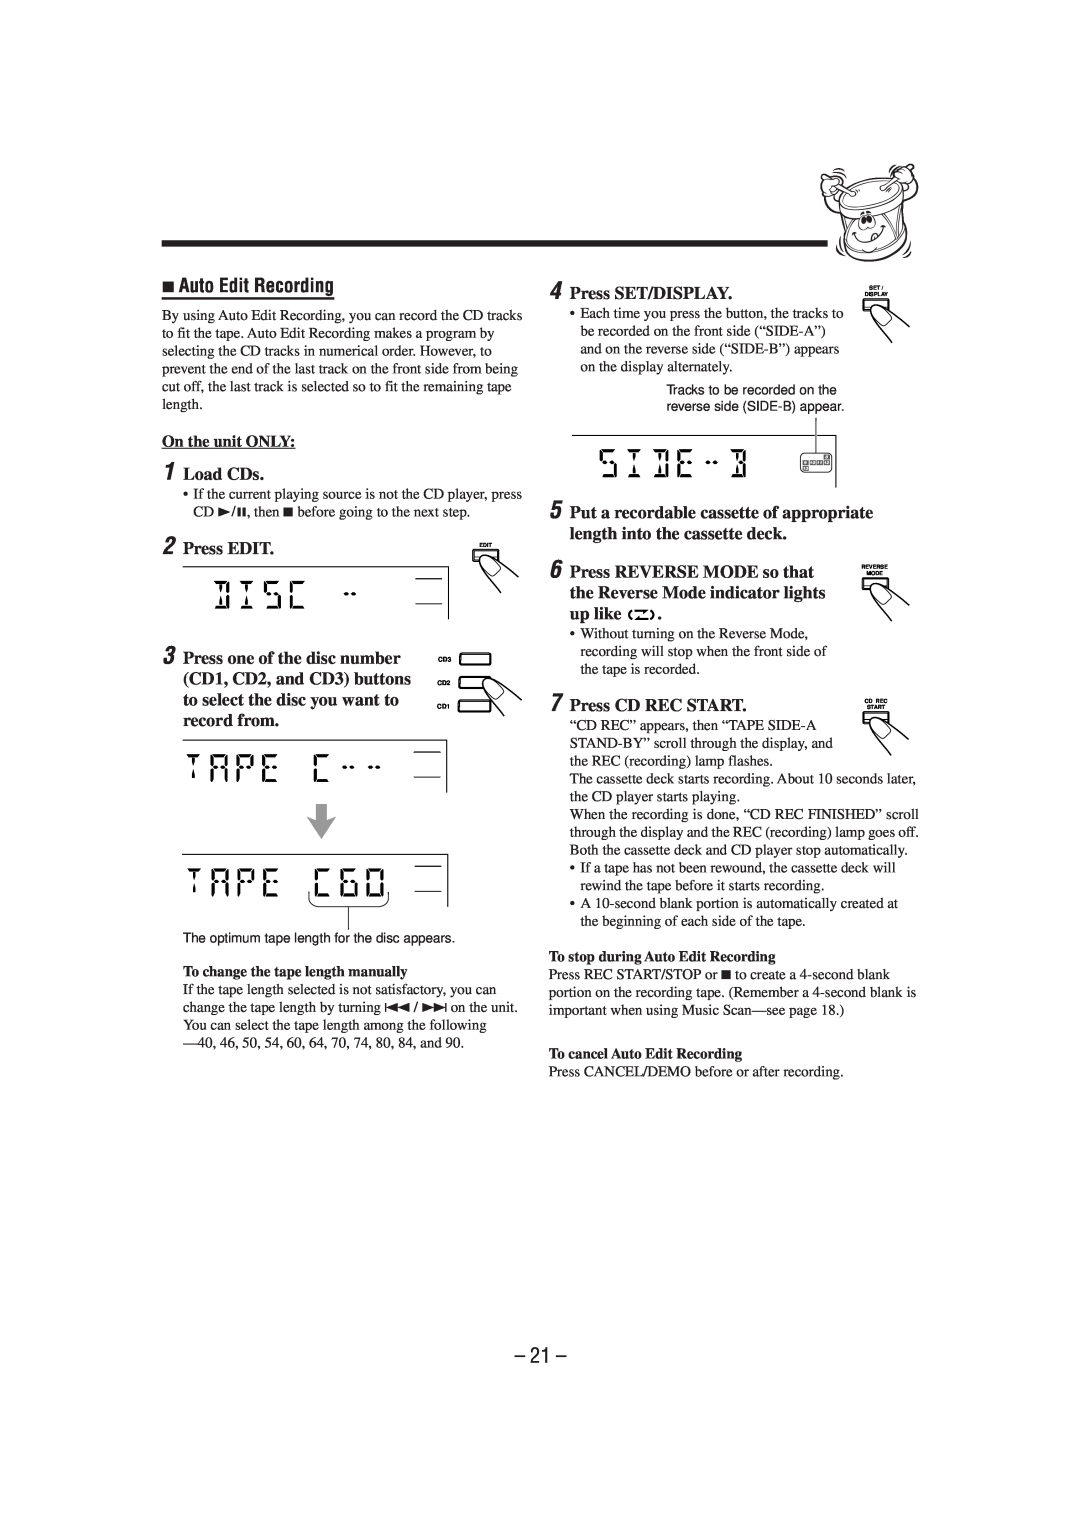 JVC HX-Z1 manual Press SET/DISPLAY, Press EDIT, record from, Press REVERSE MODE so that, the Reverse Mode indicator lights 